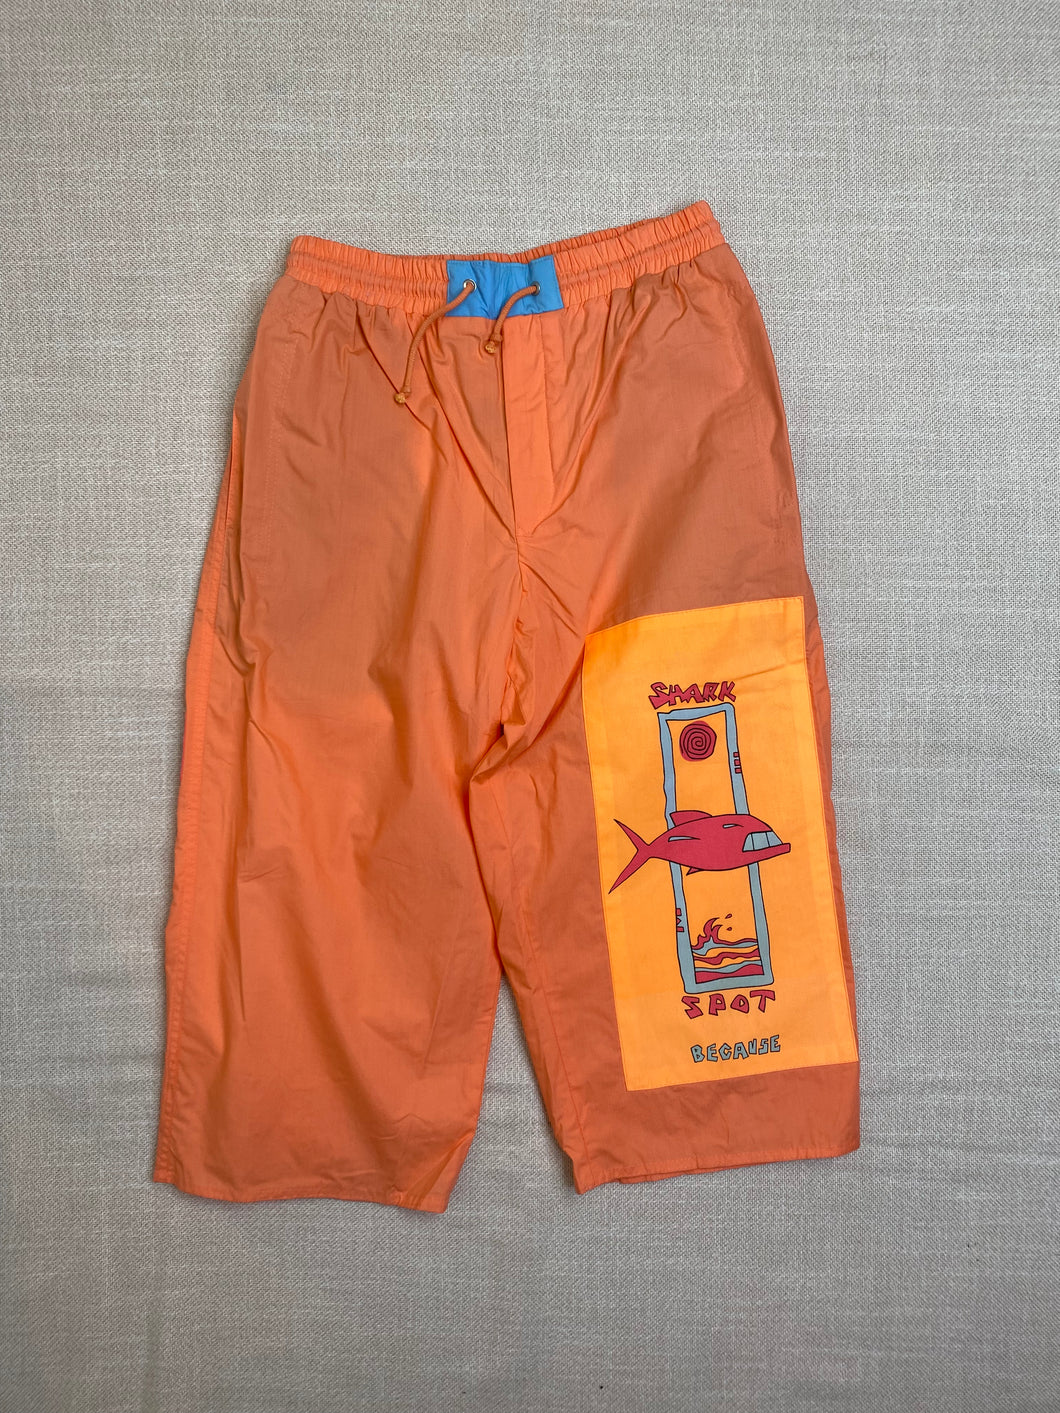 1989 Because by HCC 3/4 pants orange